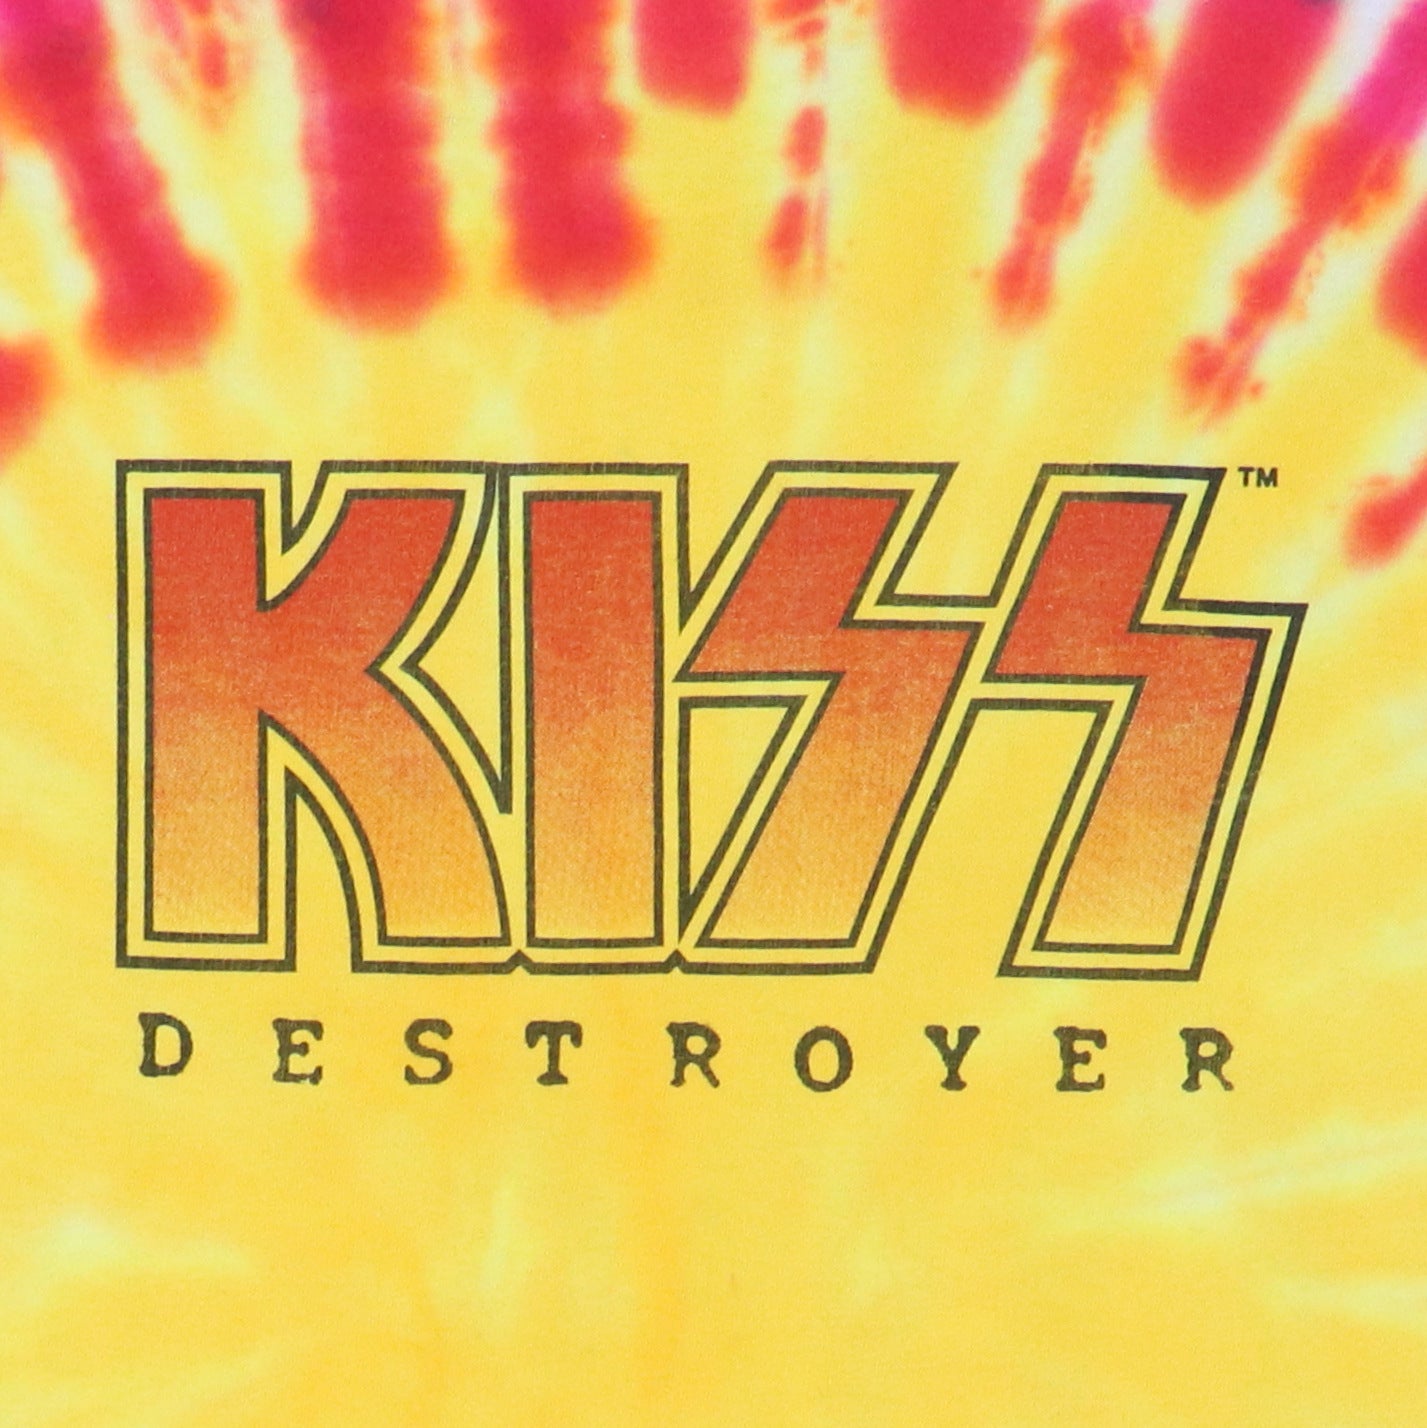 1997 Kiss Destroyer Tie Dye Shirt